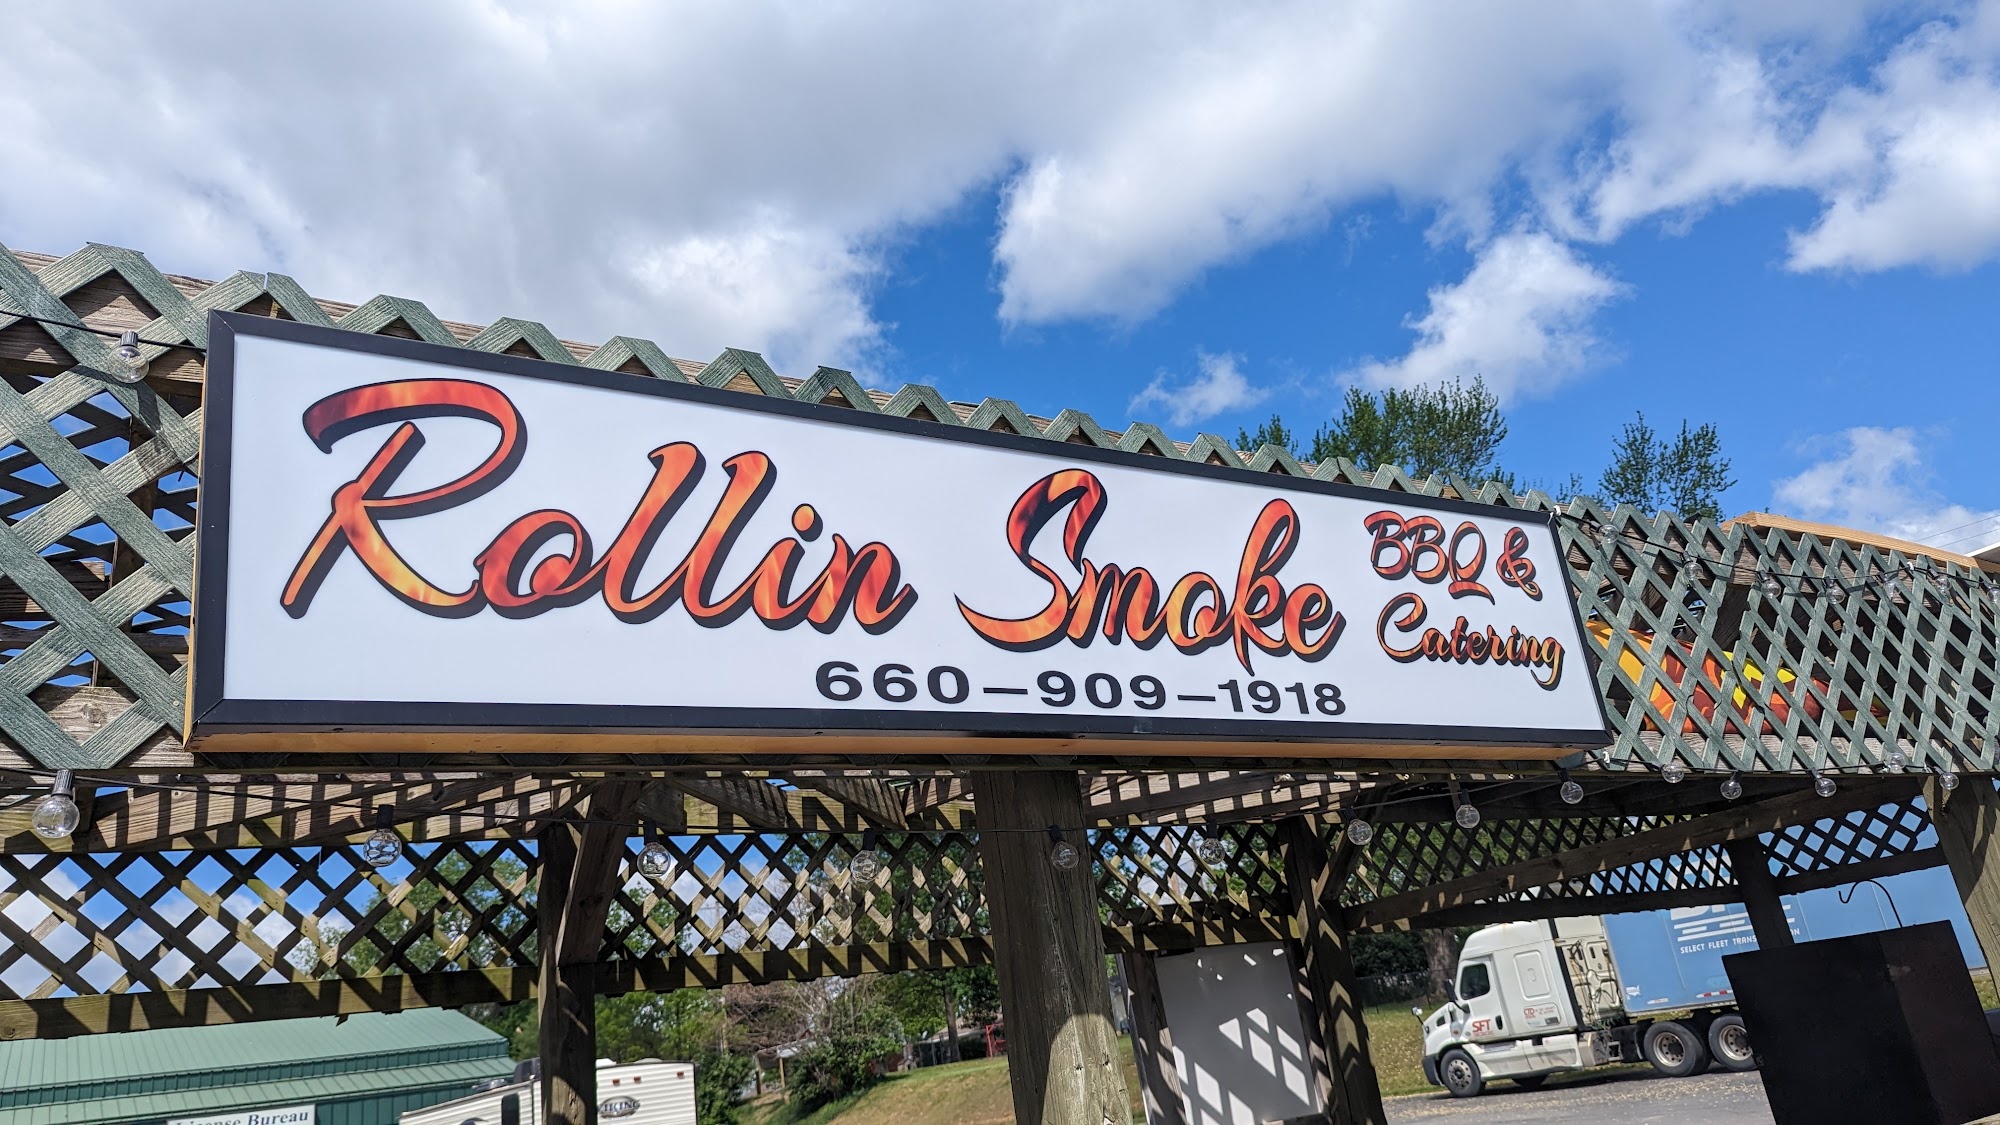 Rollin Smoke BBQ & Catering